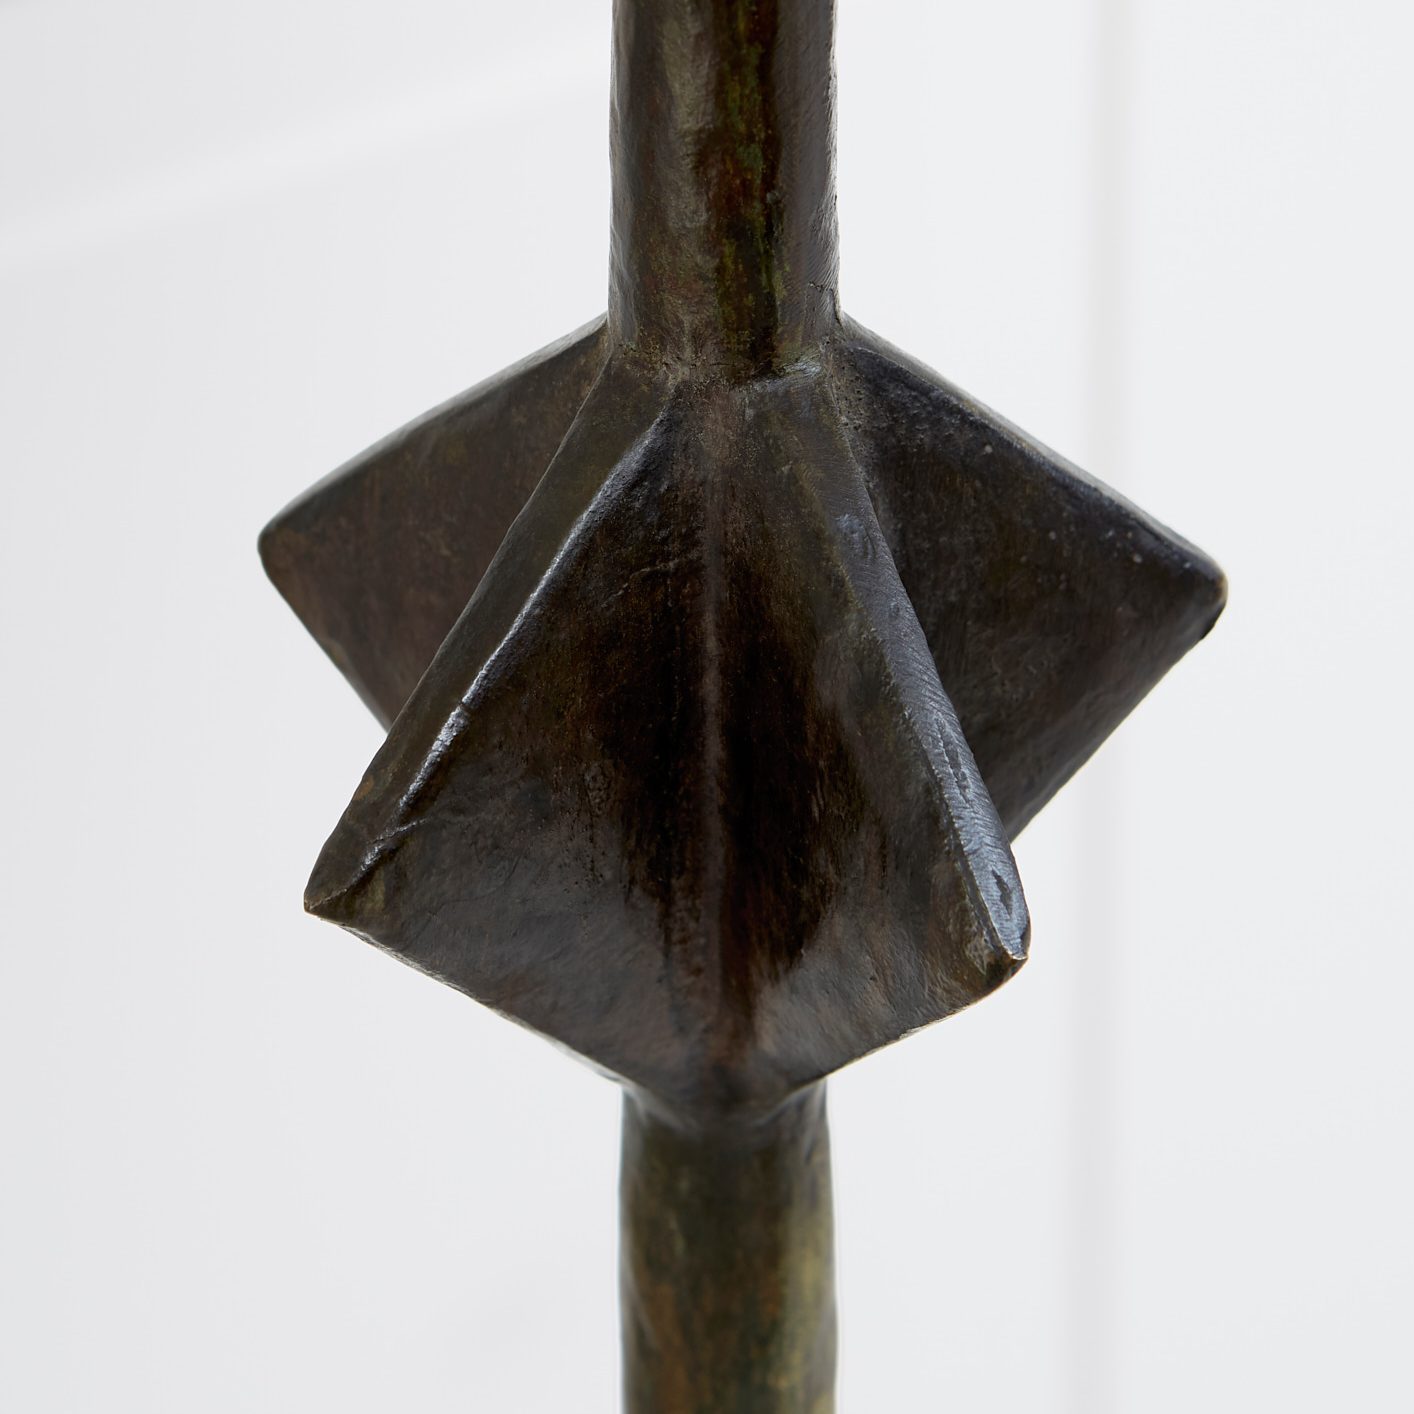 Alberto Giacometti, “Étoile” floor lamp, vue 01